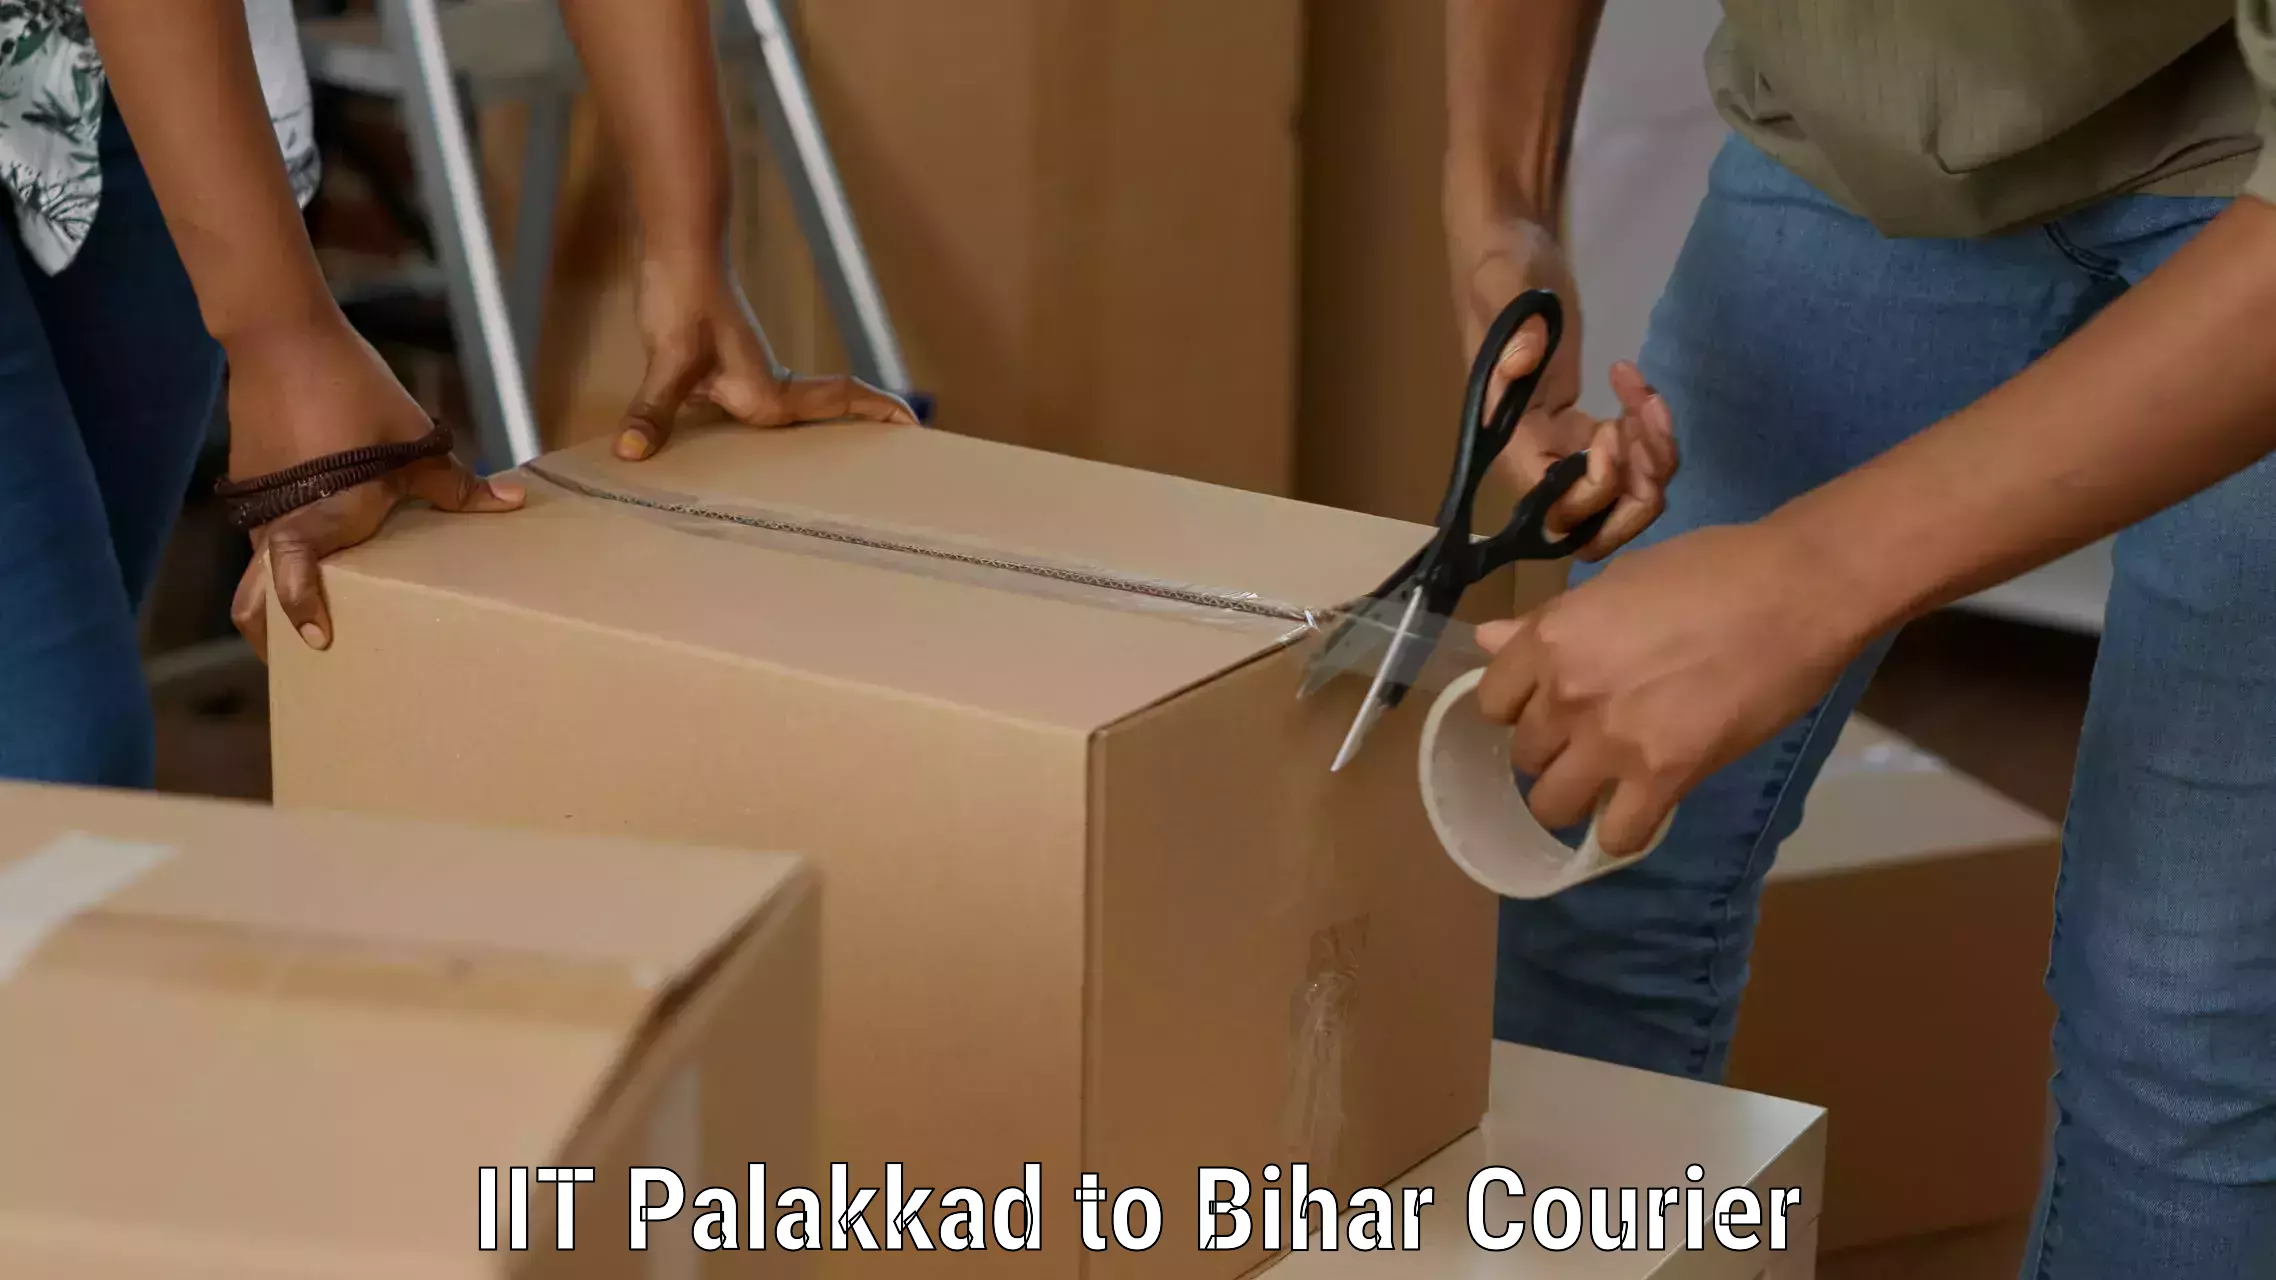 Digital courier platforms in IIT Palakkad to Mairwa